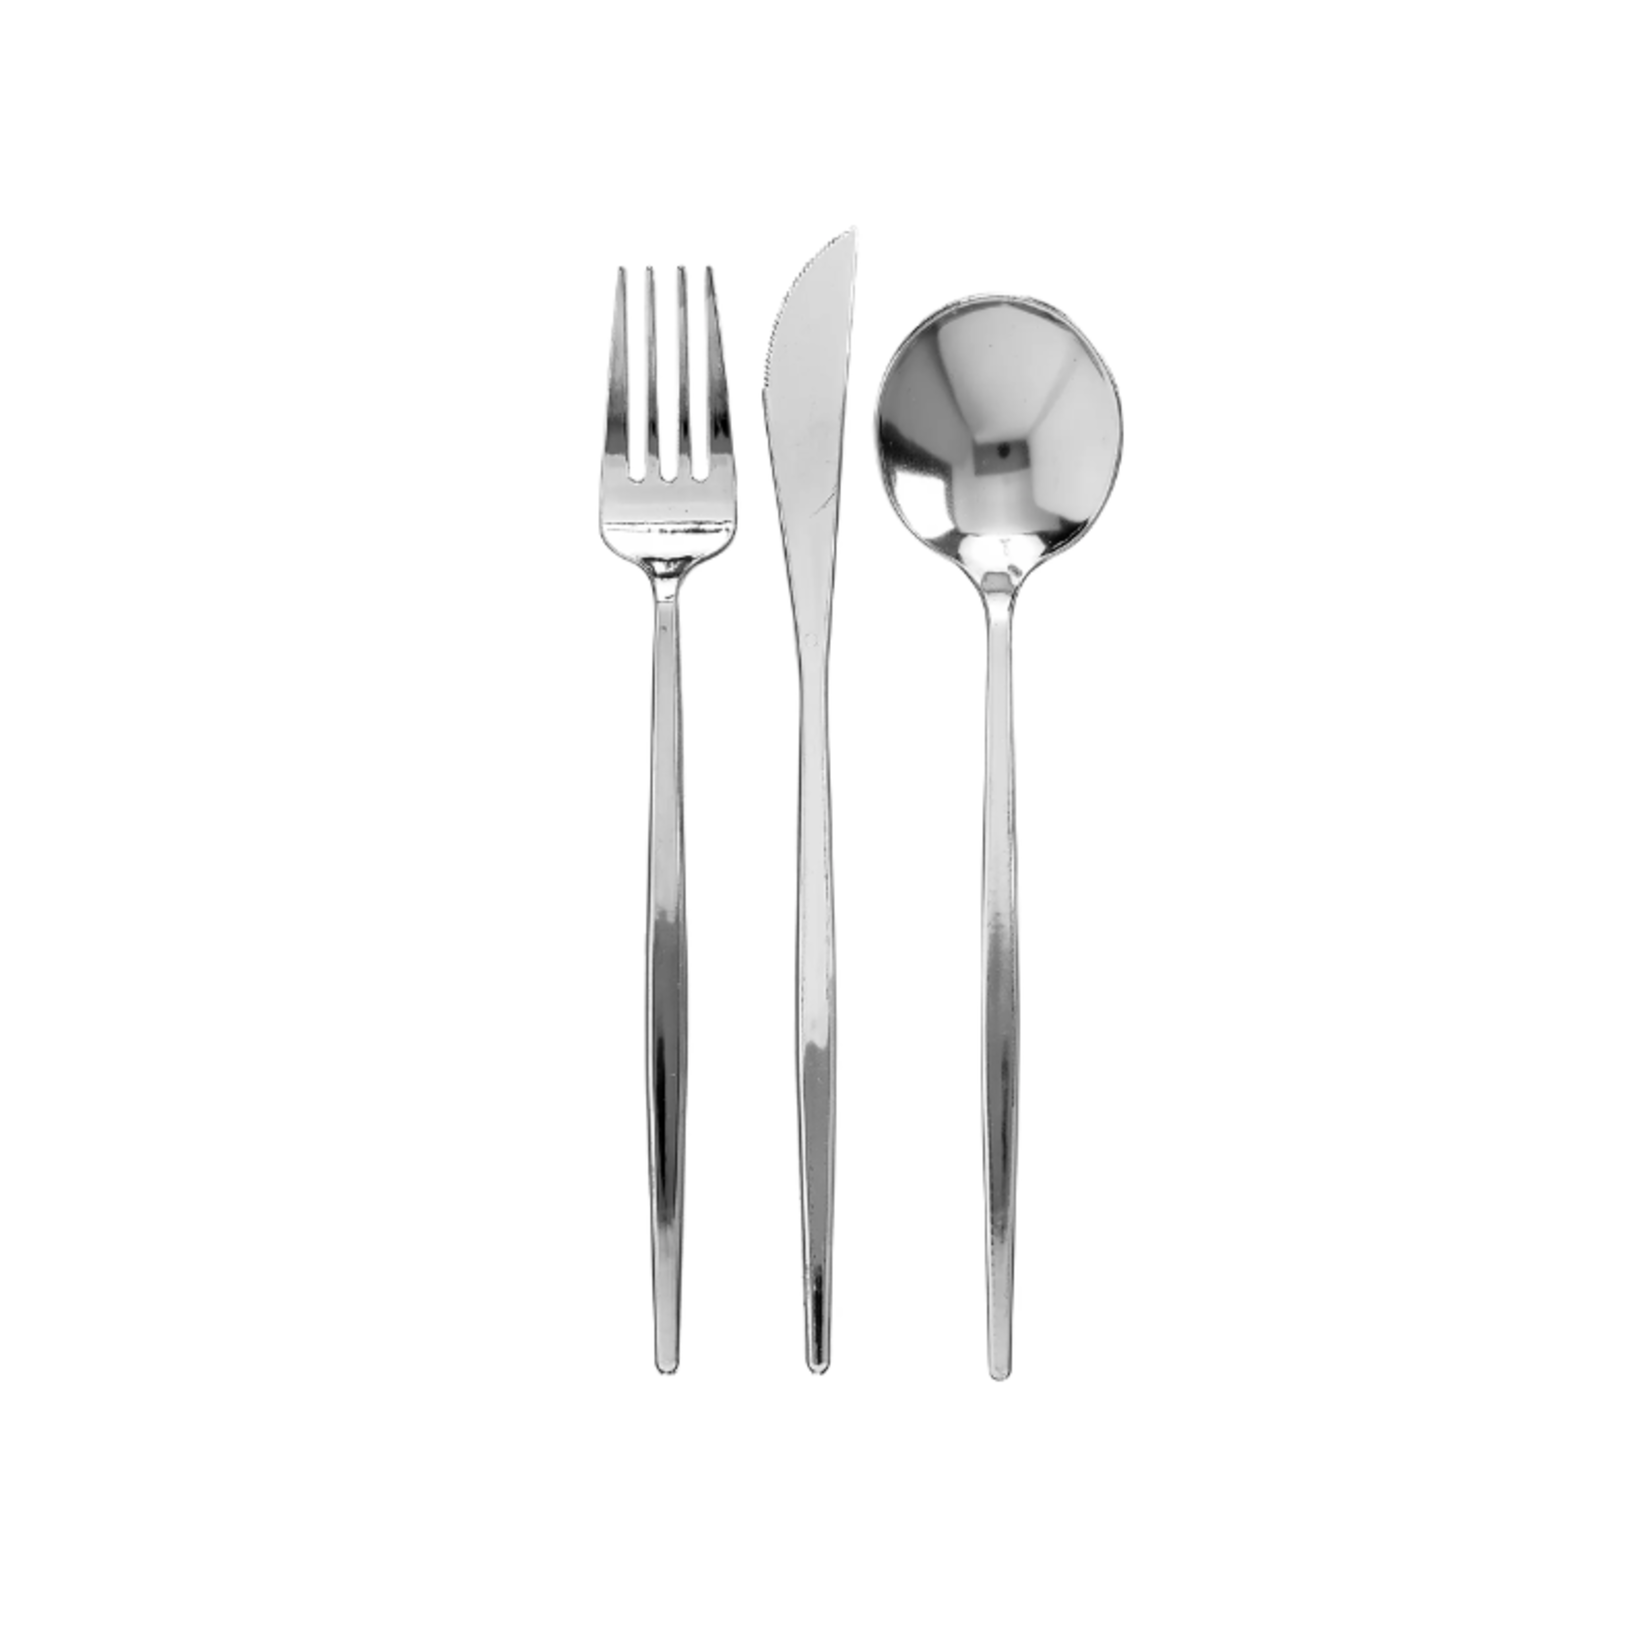 Silverspoons Opulence Silver Flatware - 24 settings